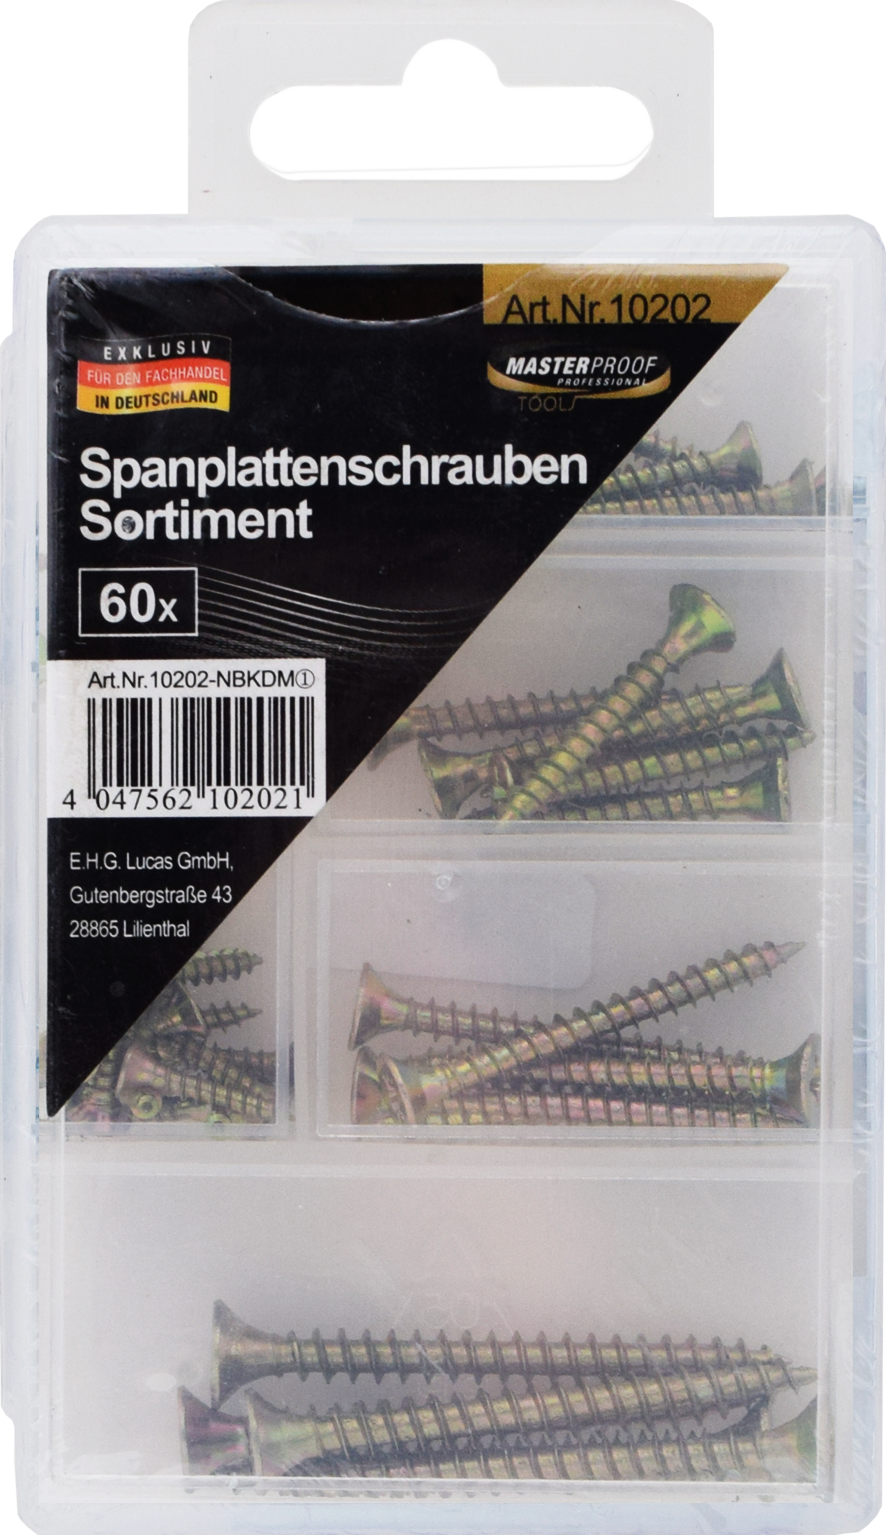 Picture of Spanplattenschrauben-Sortiment